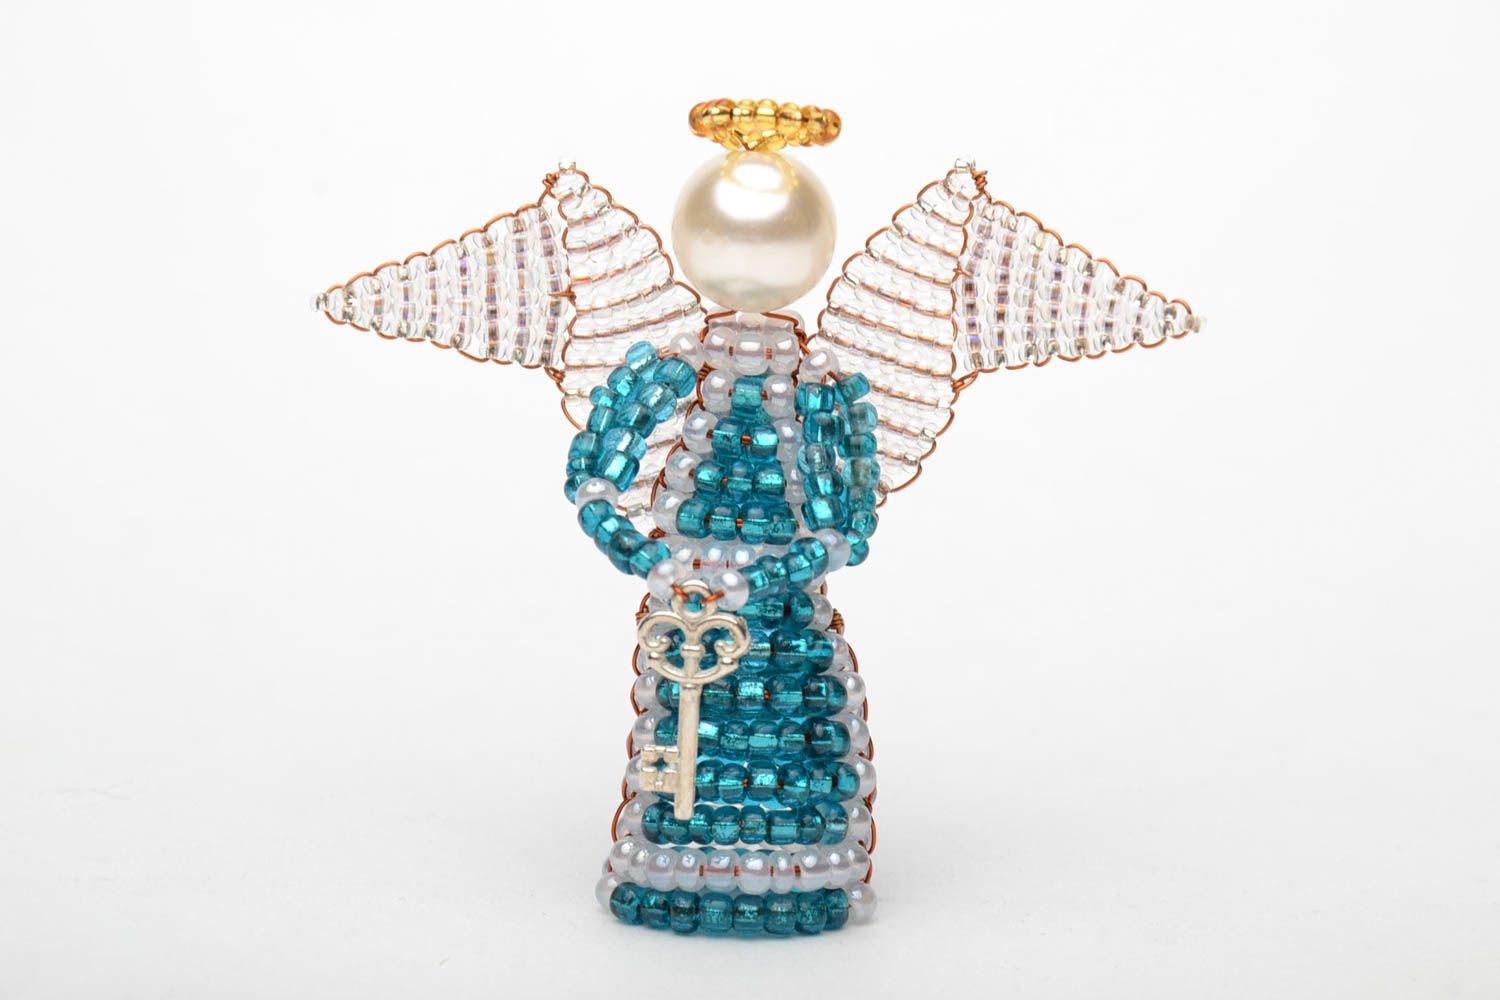 Angel figurine made of Czech beads photo 3